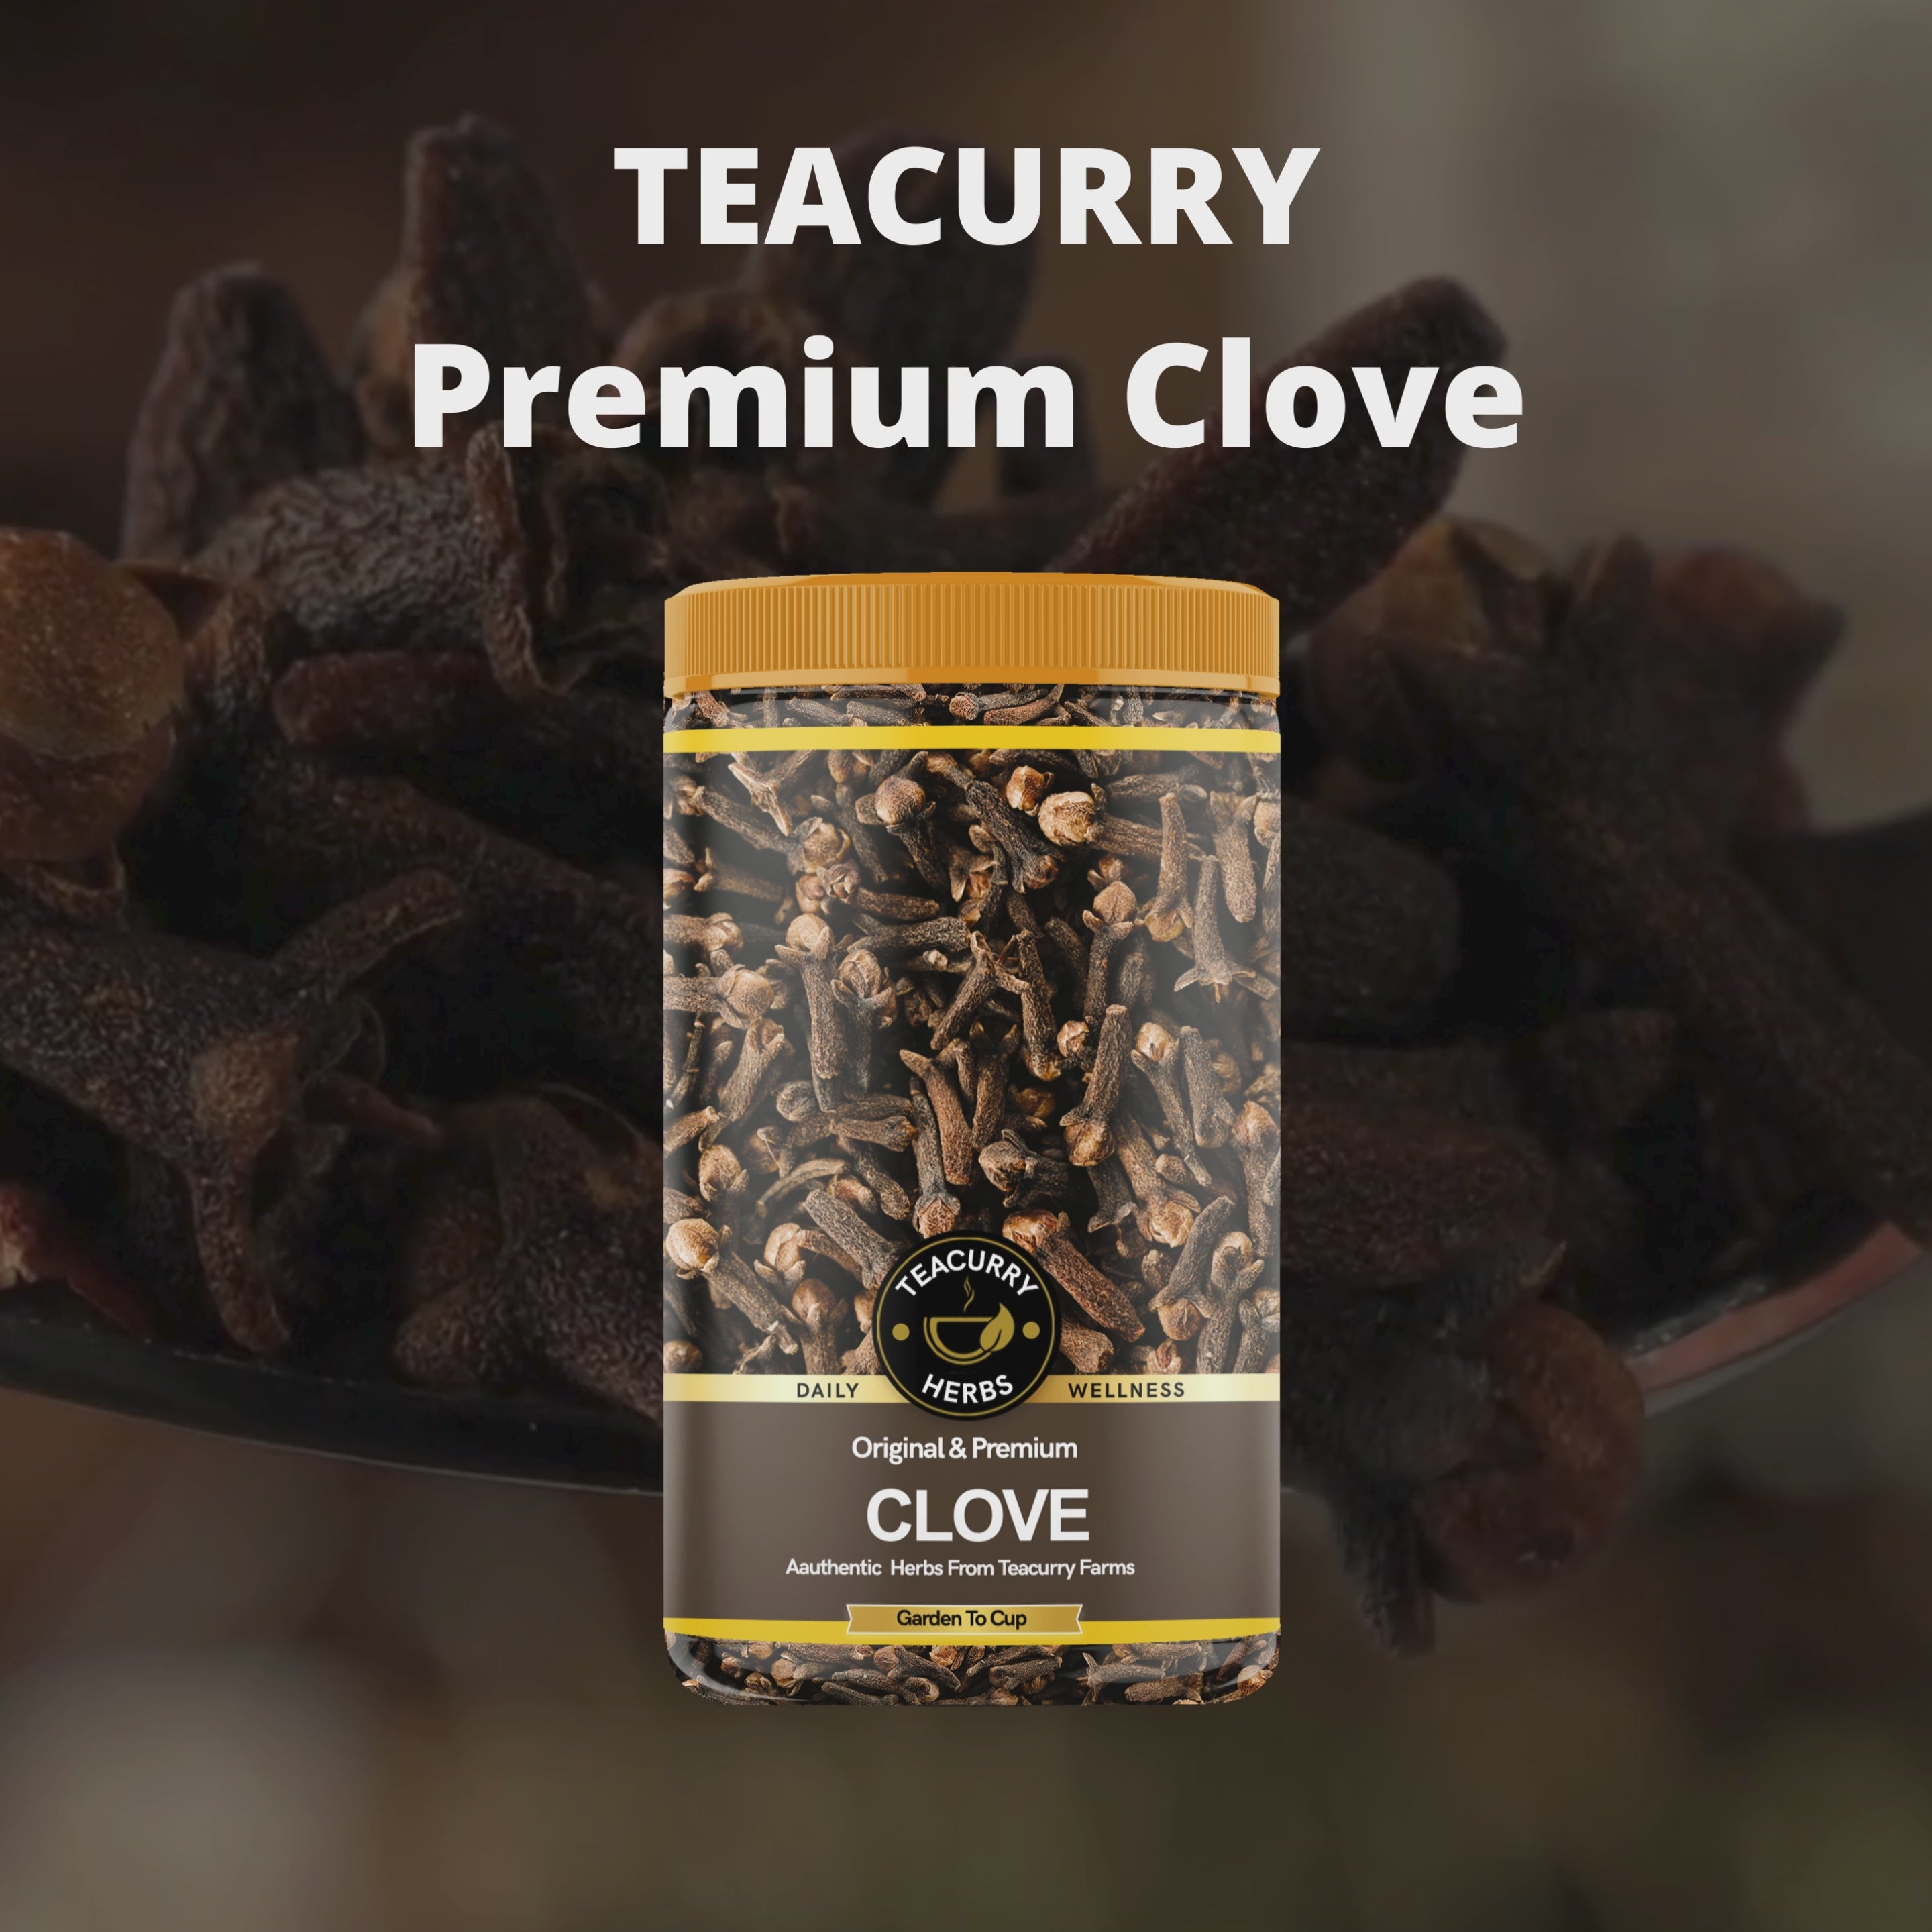 Teacurry Premium Clove Video